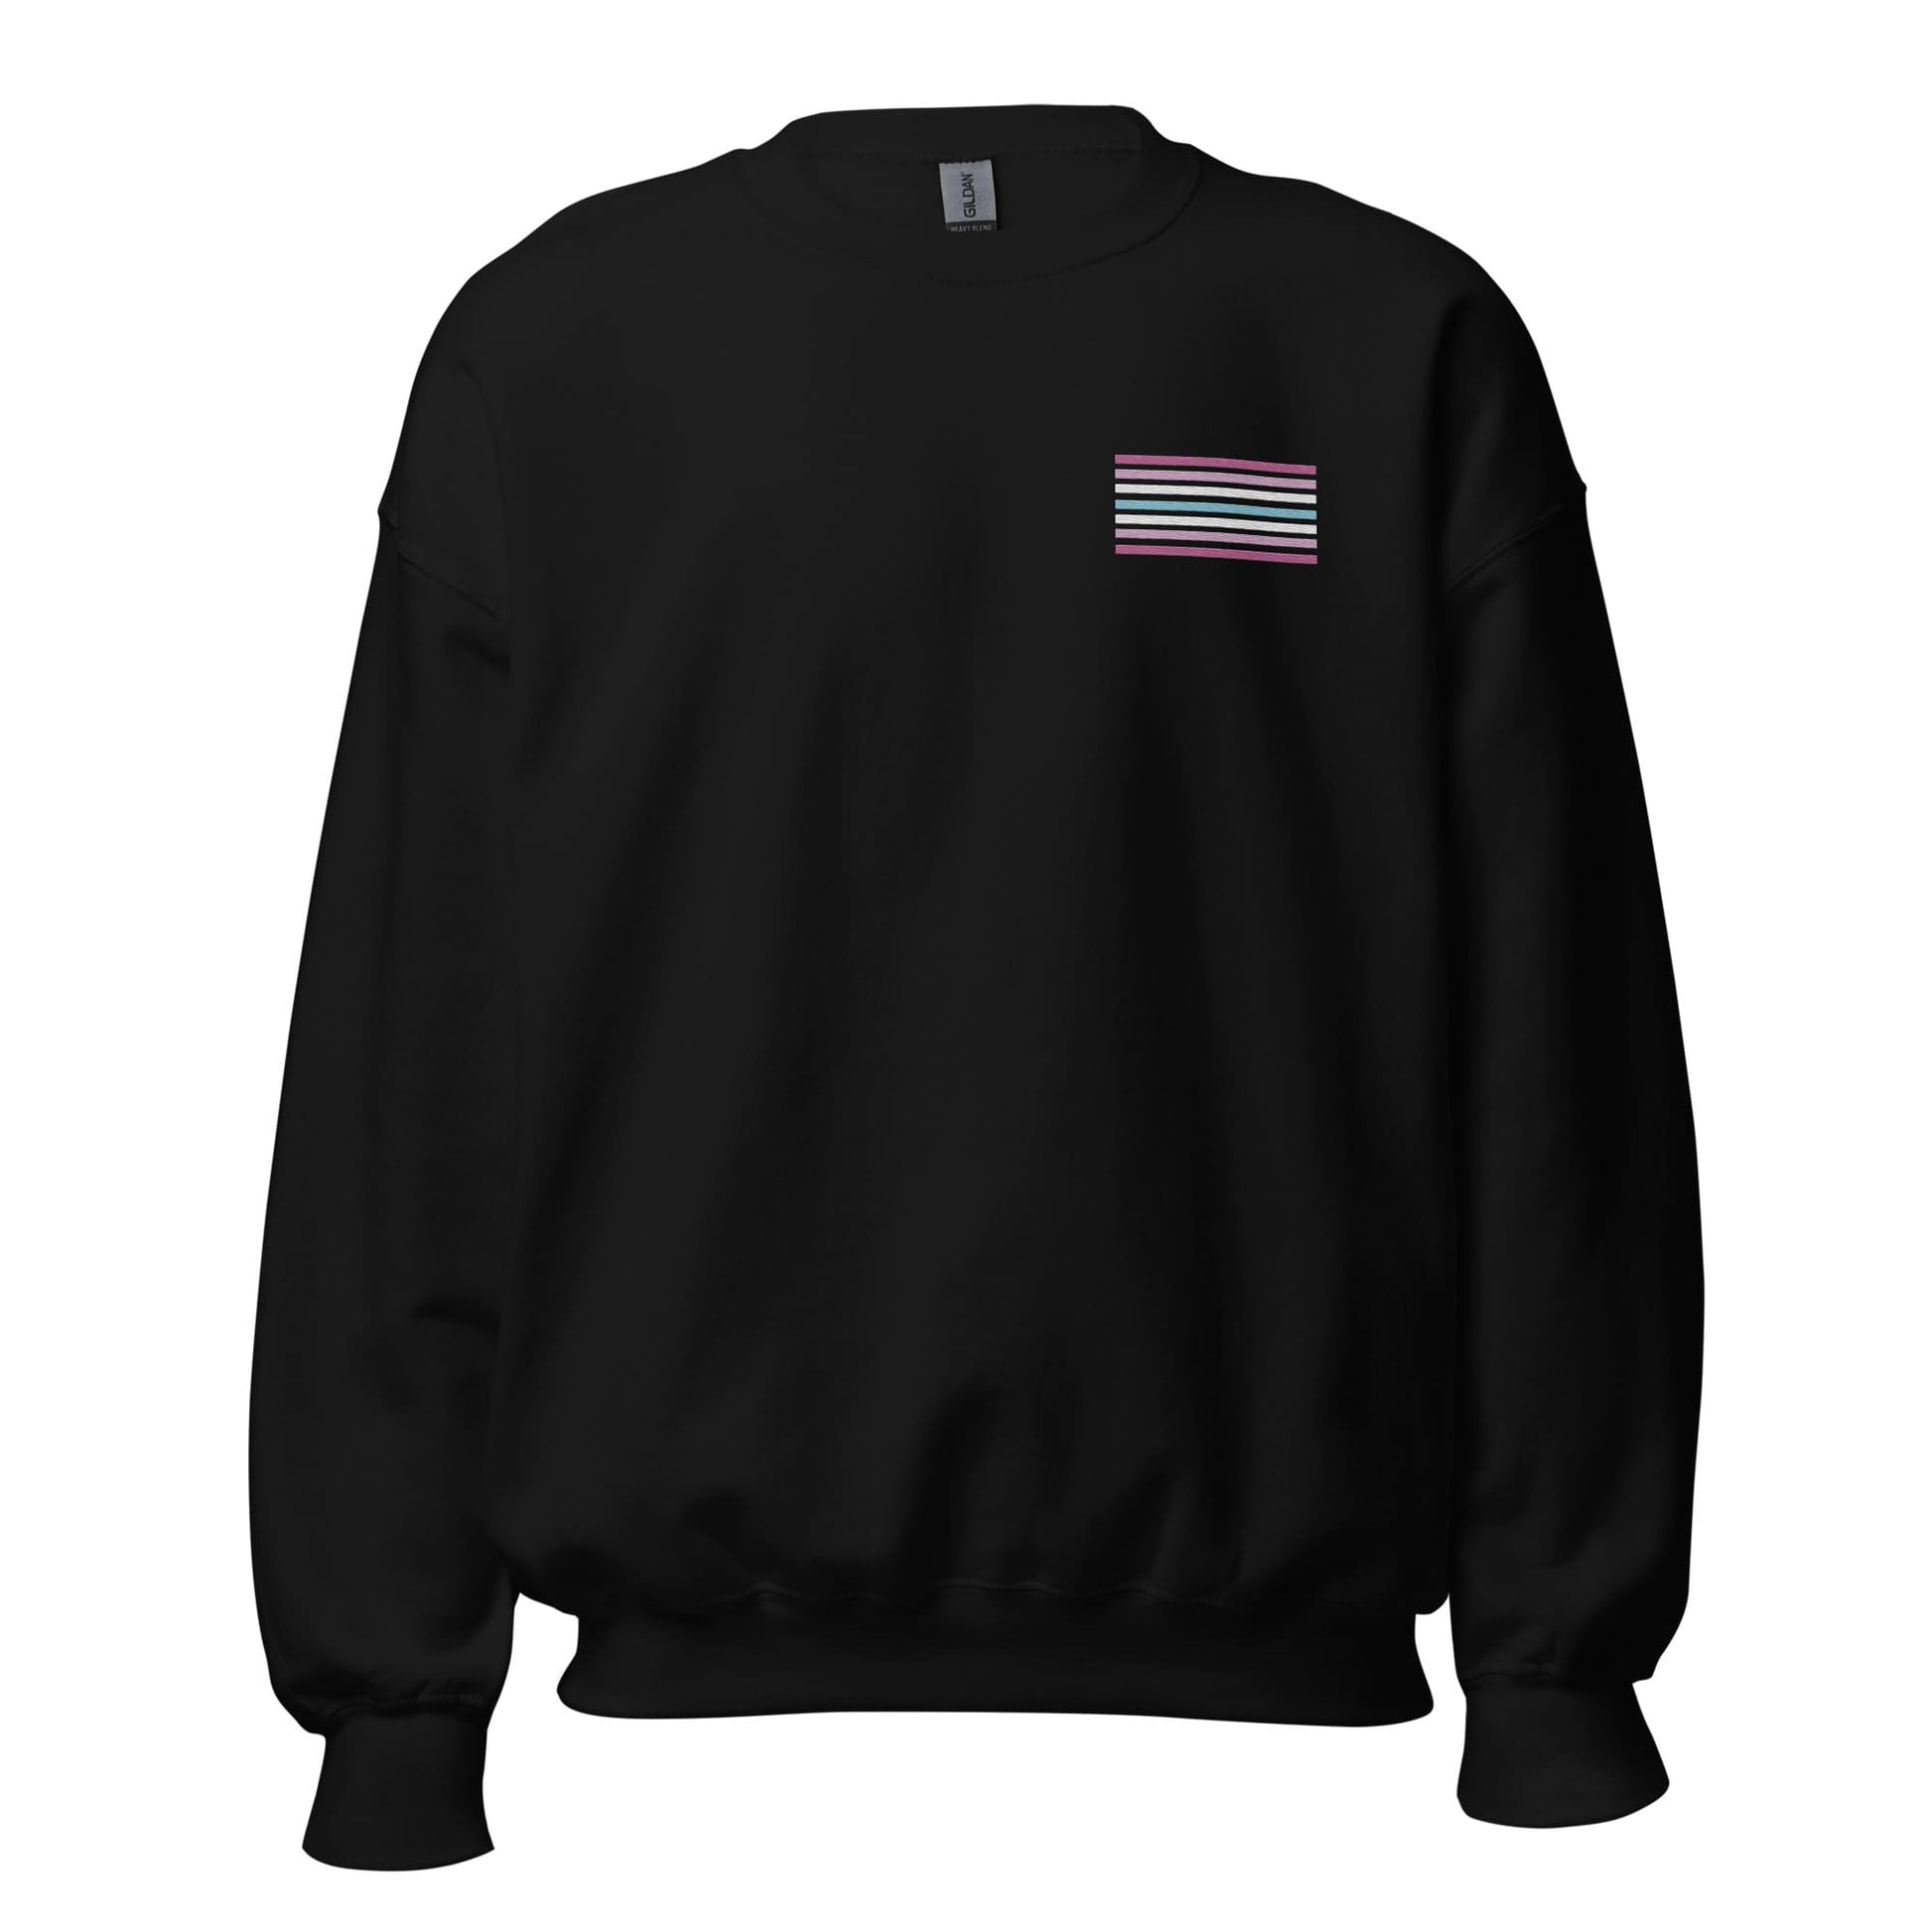 femboy sweatshirt, subtle femboi pride flag embroidered pocket design sweater, hang